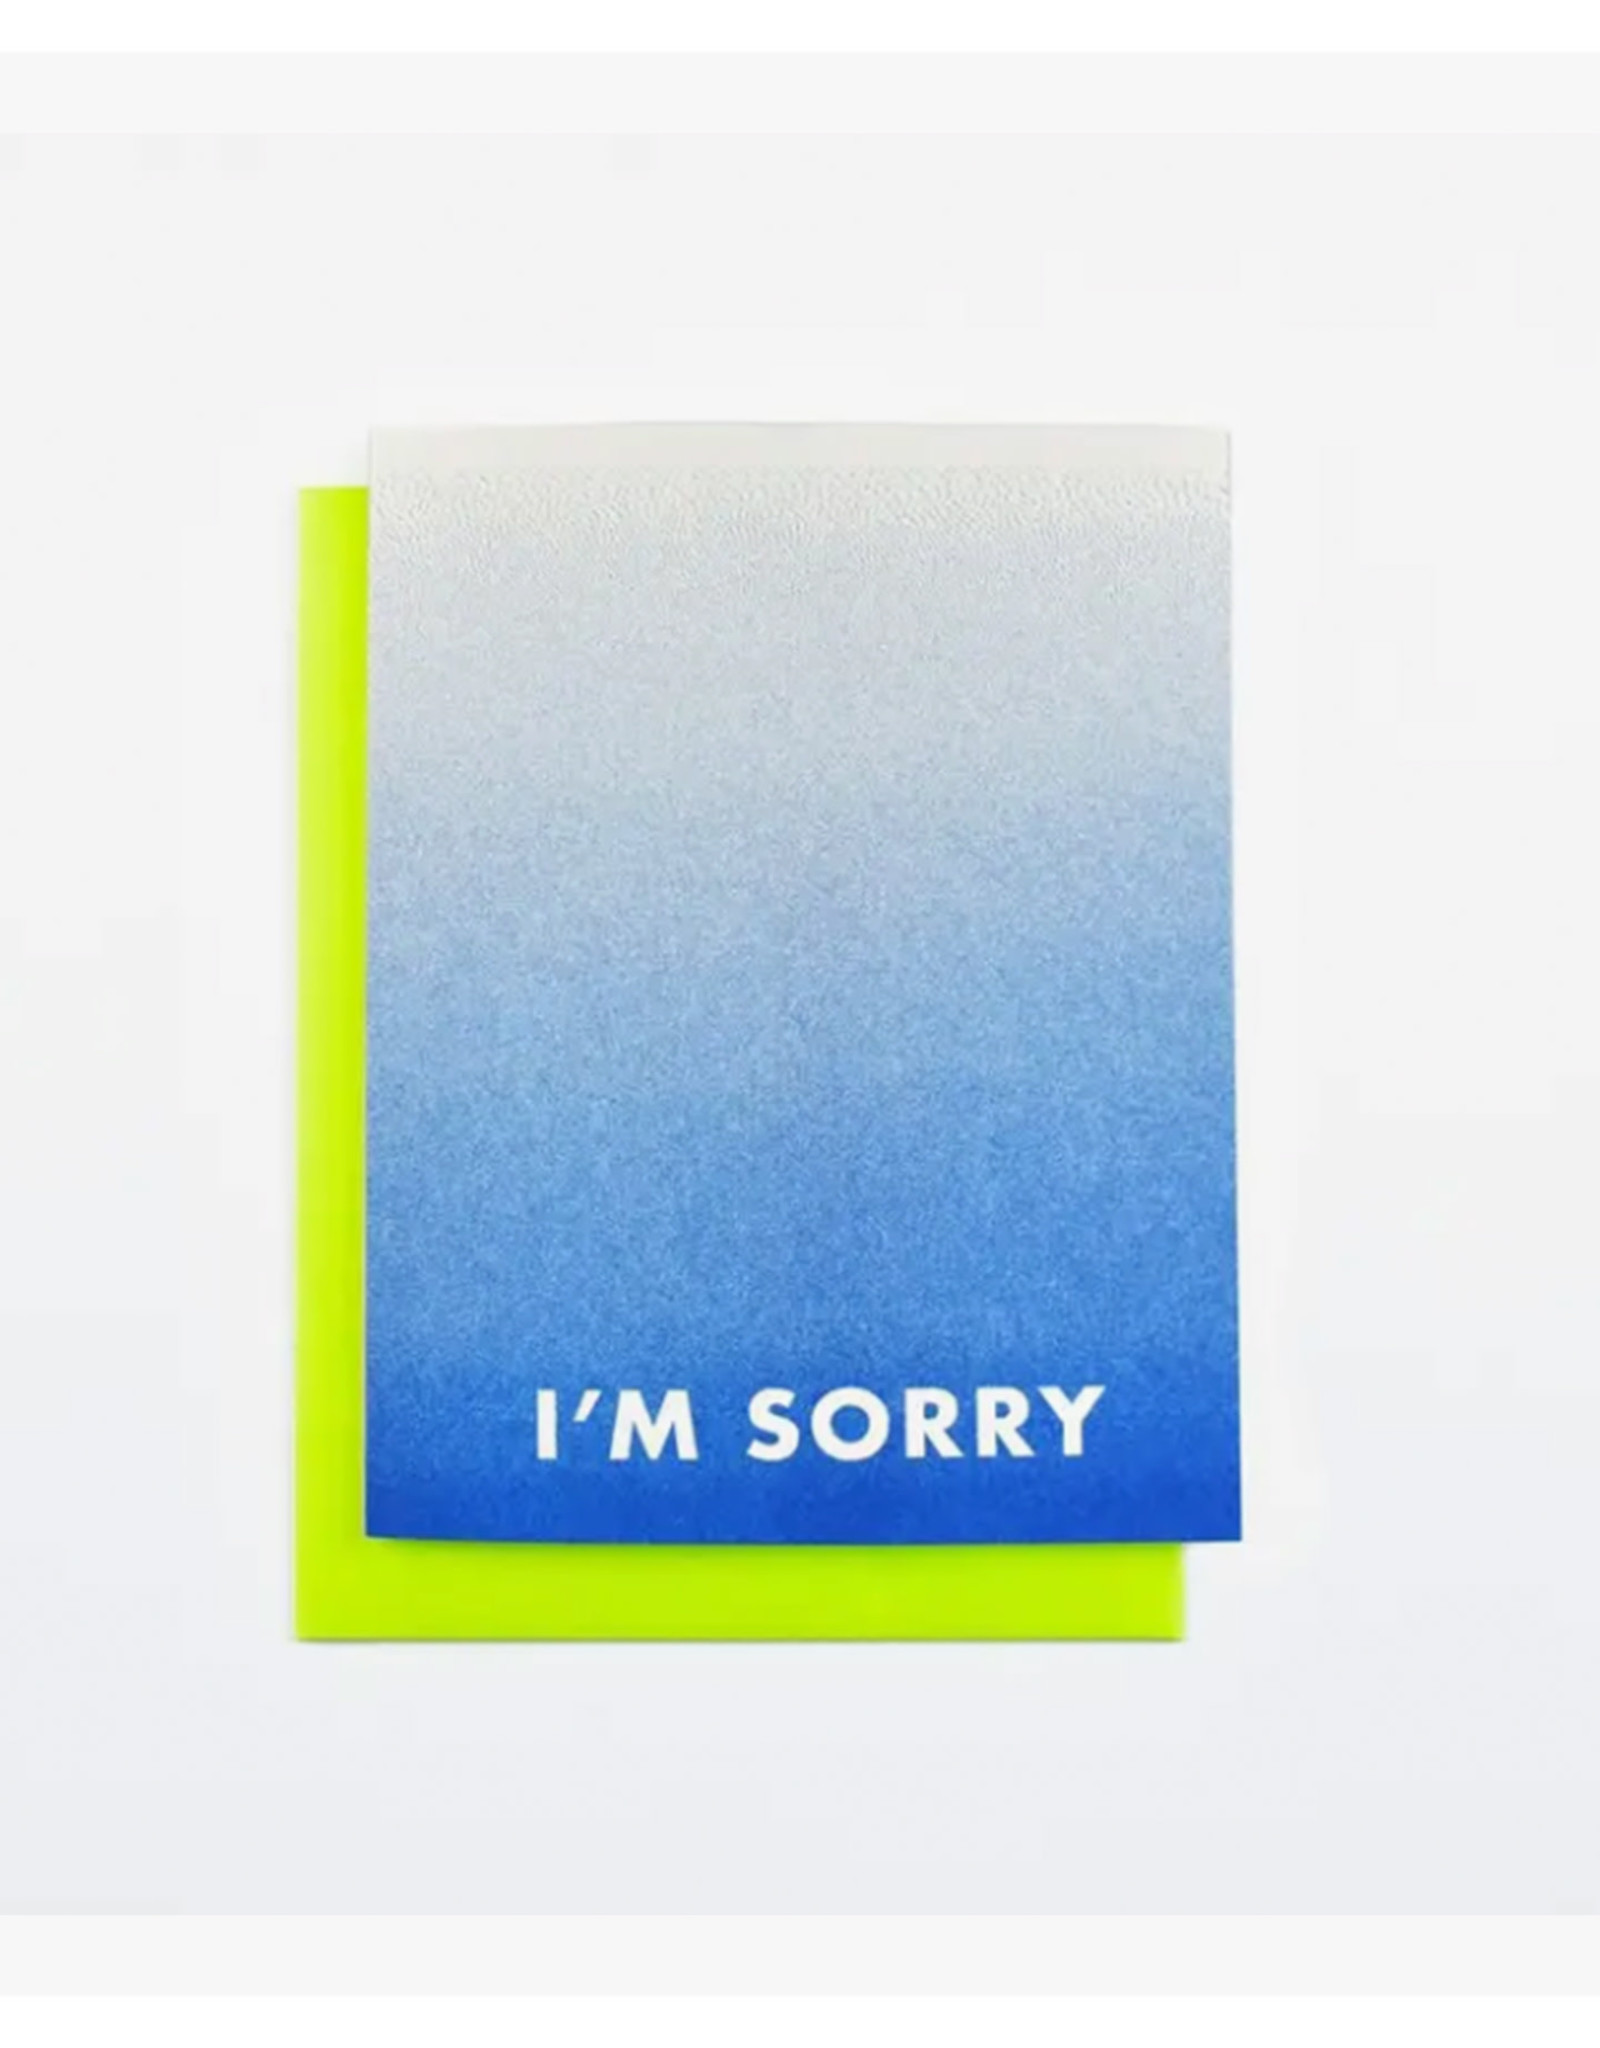 I'm Sorry - Condolences Greeting Card